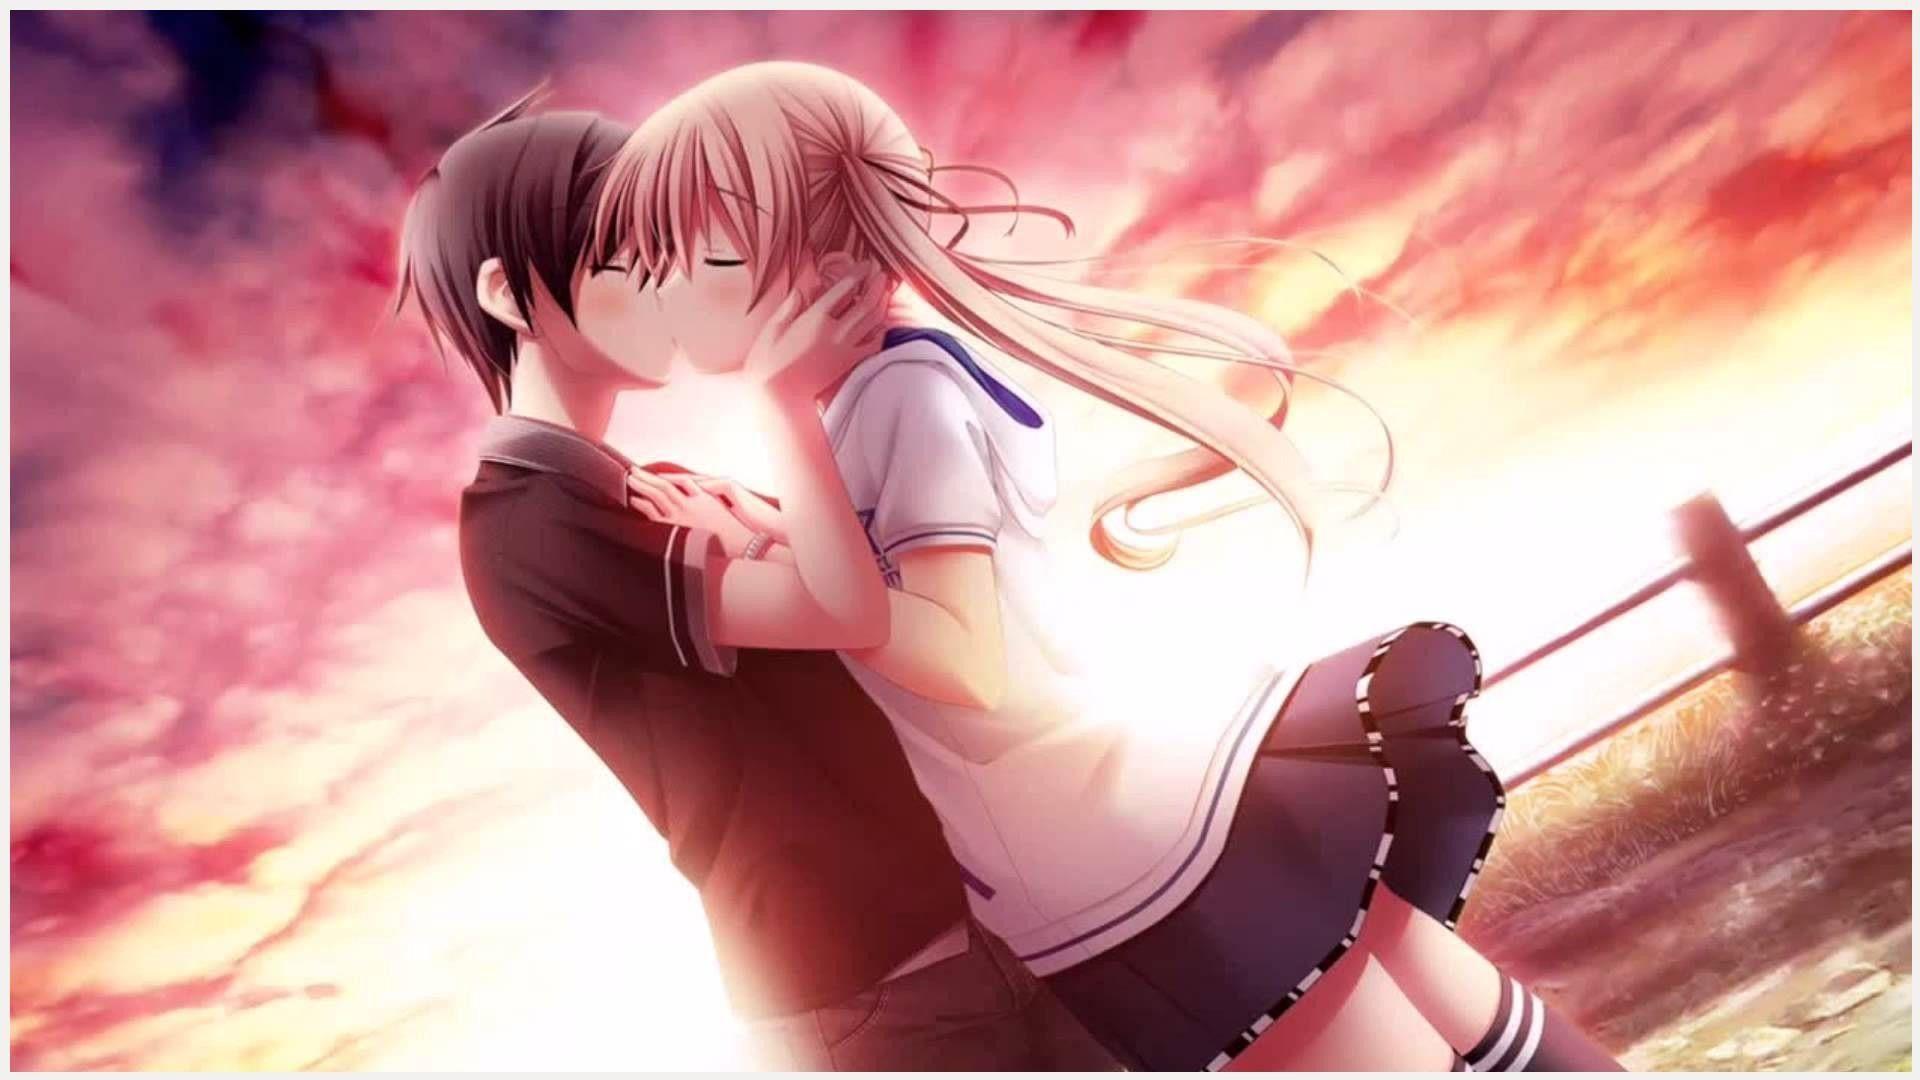 Hug anime couple deep love cuddle romantic  9 Images